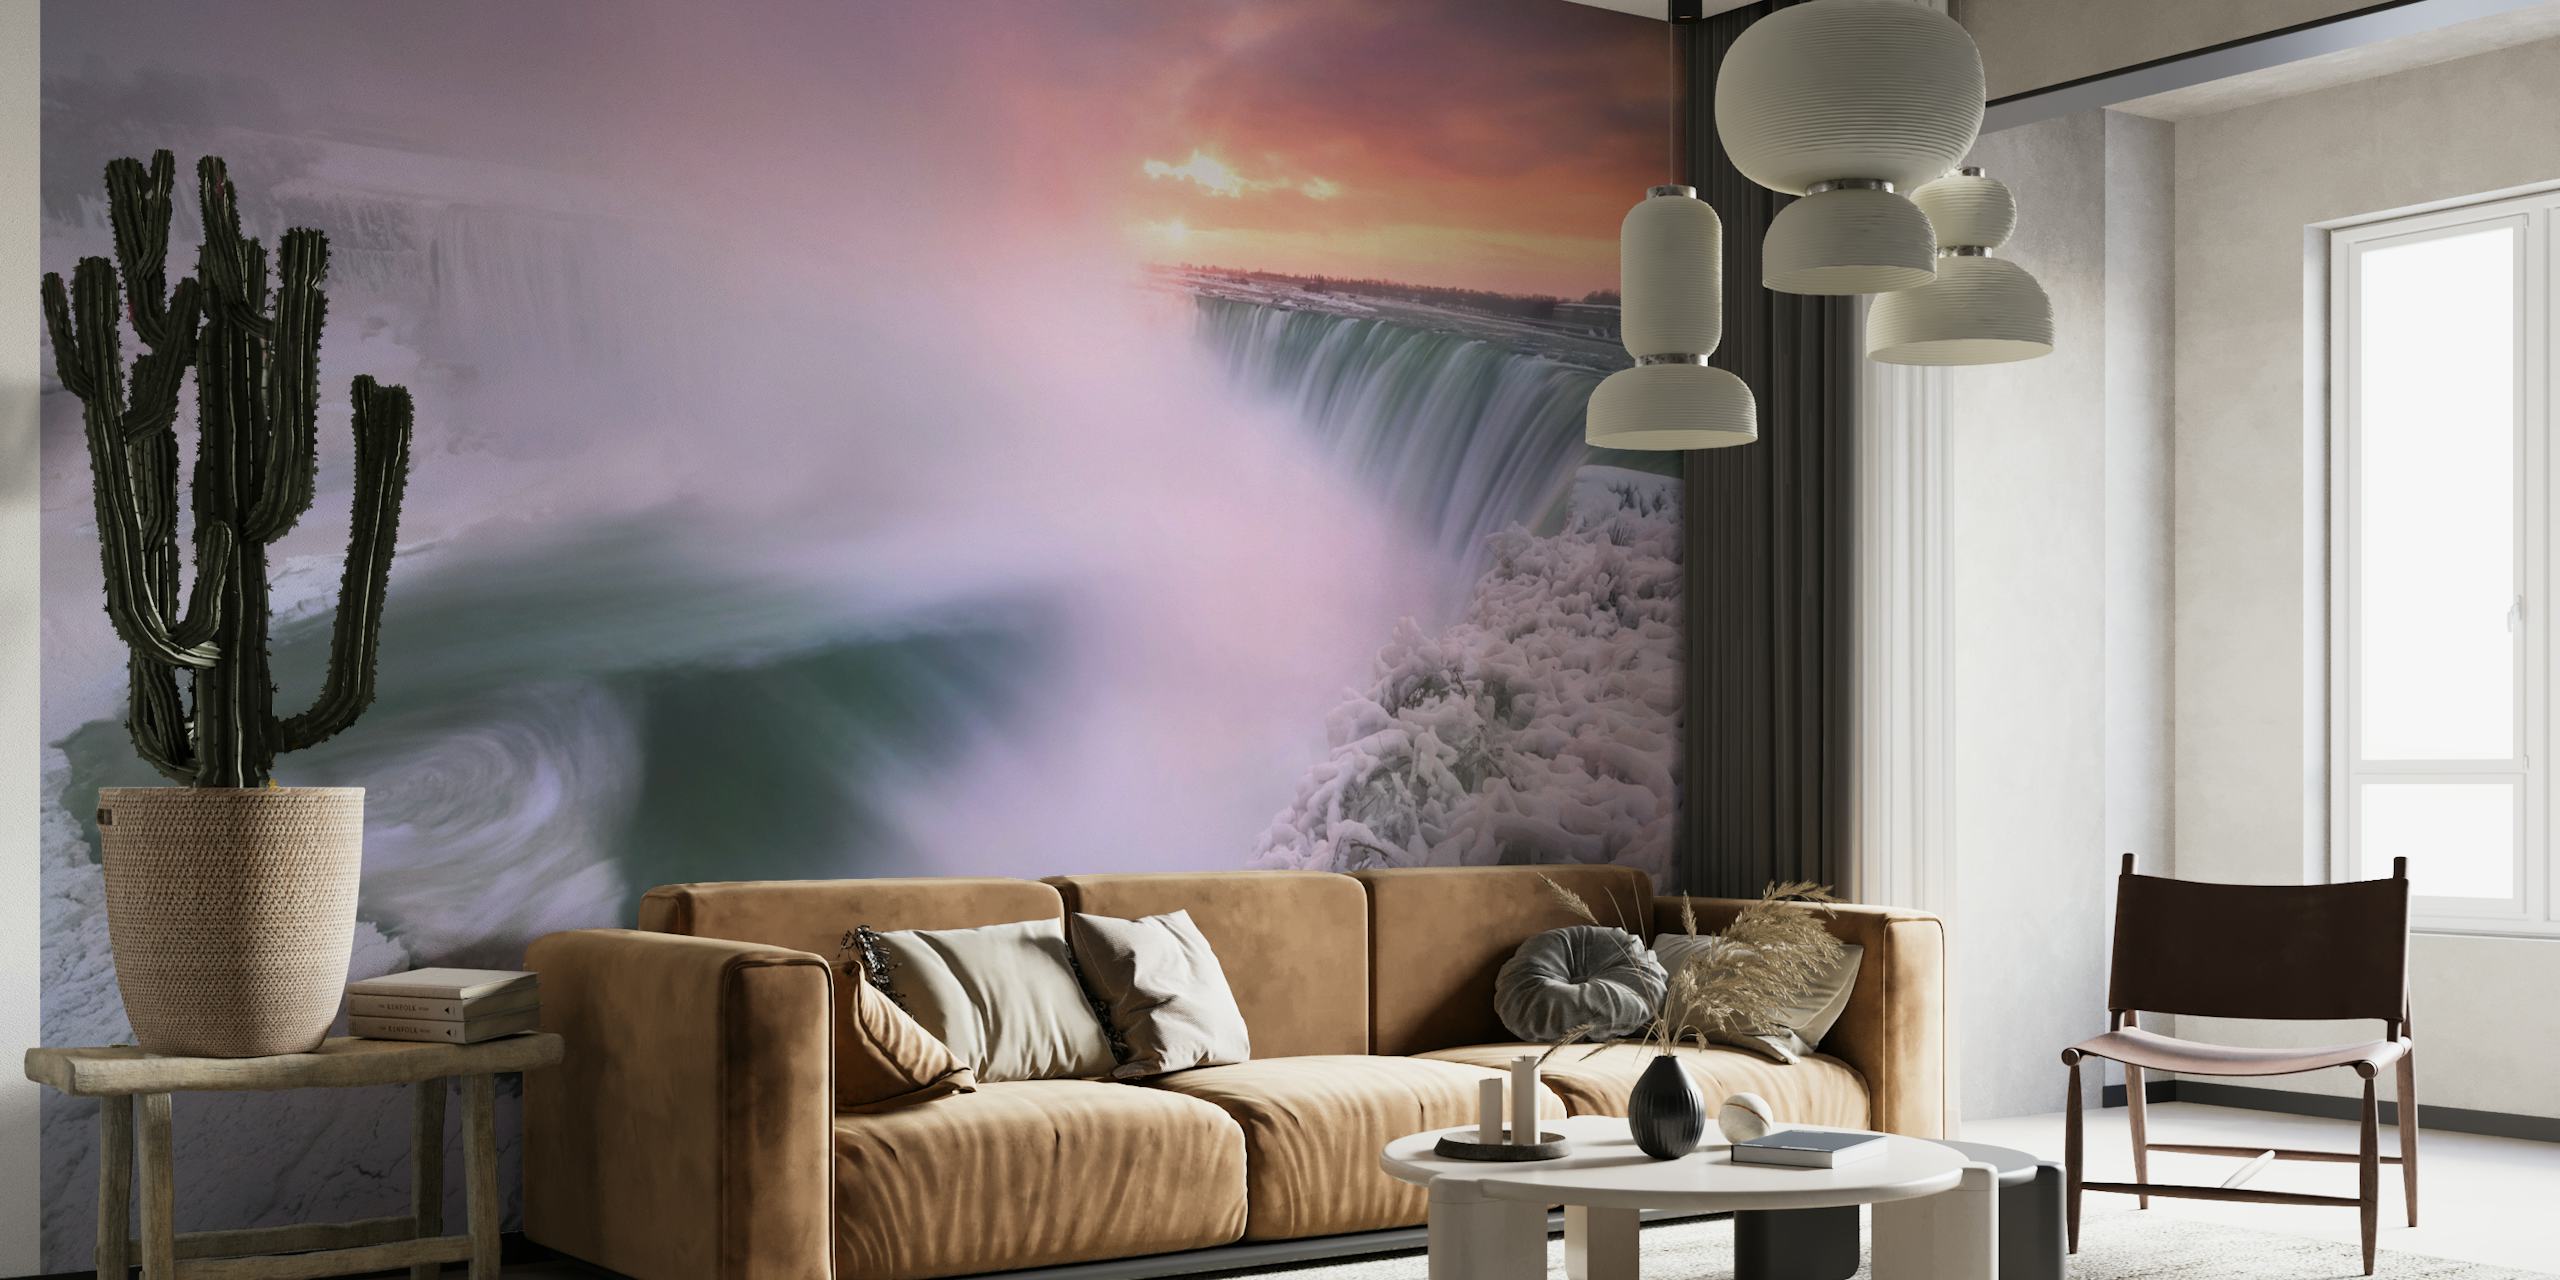 Niagara falls in winter wallpaper